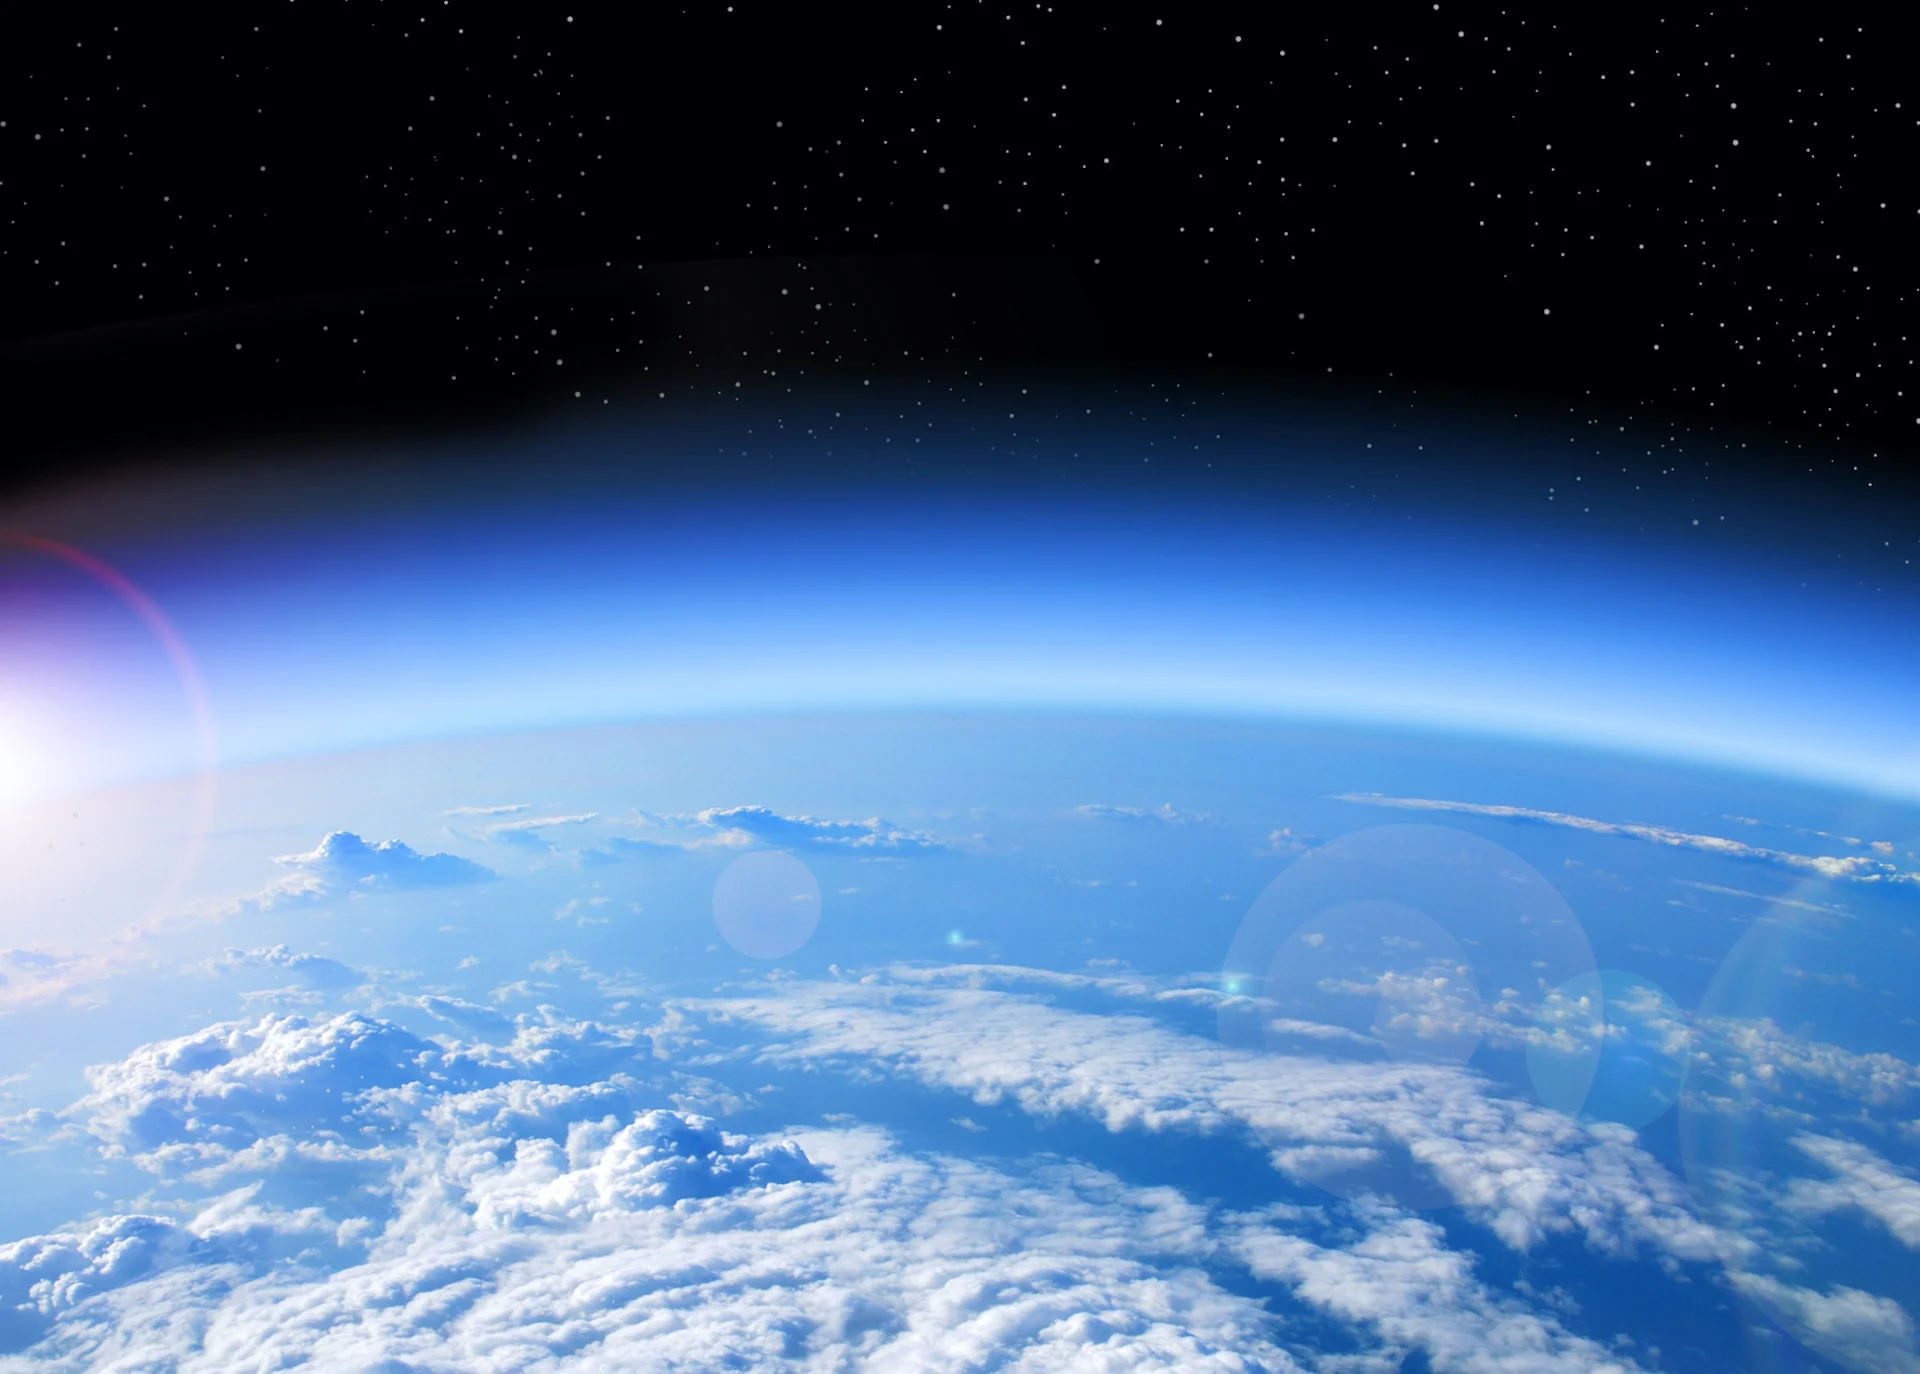 New tropics ozone hole is 7 times bigger than Antarctic hole, study says